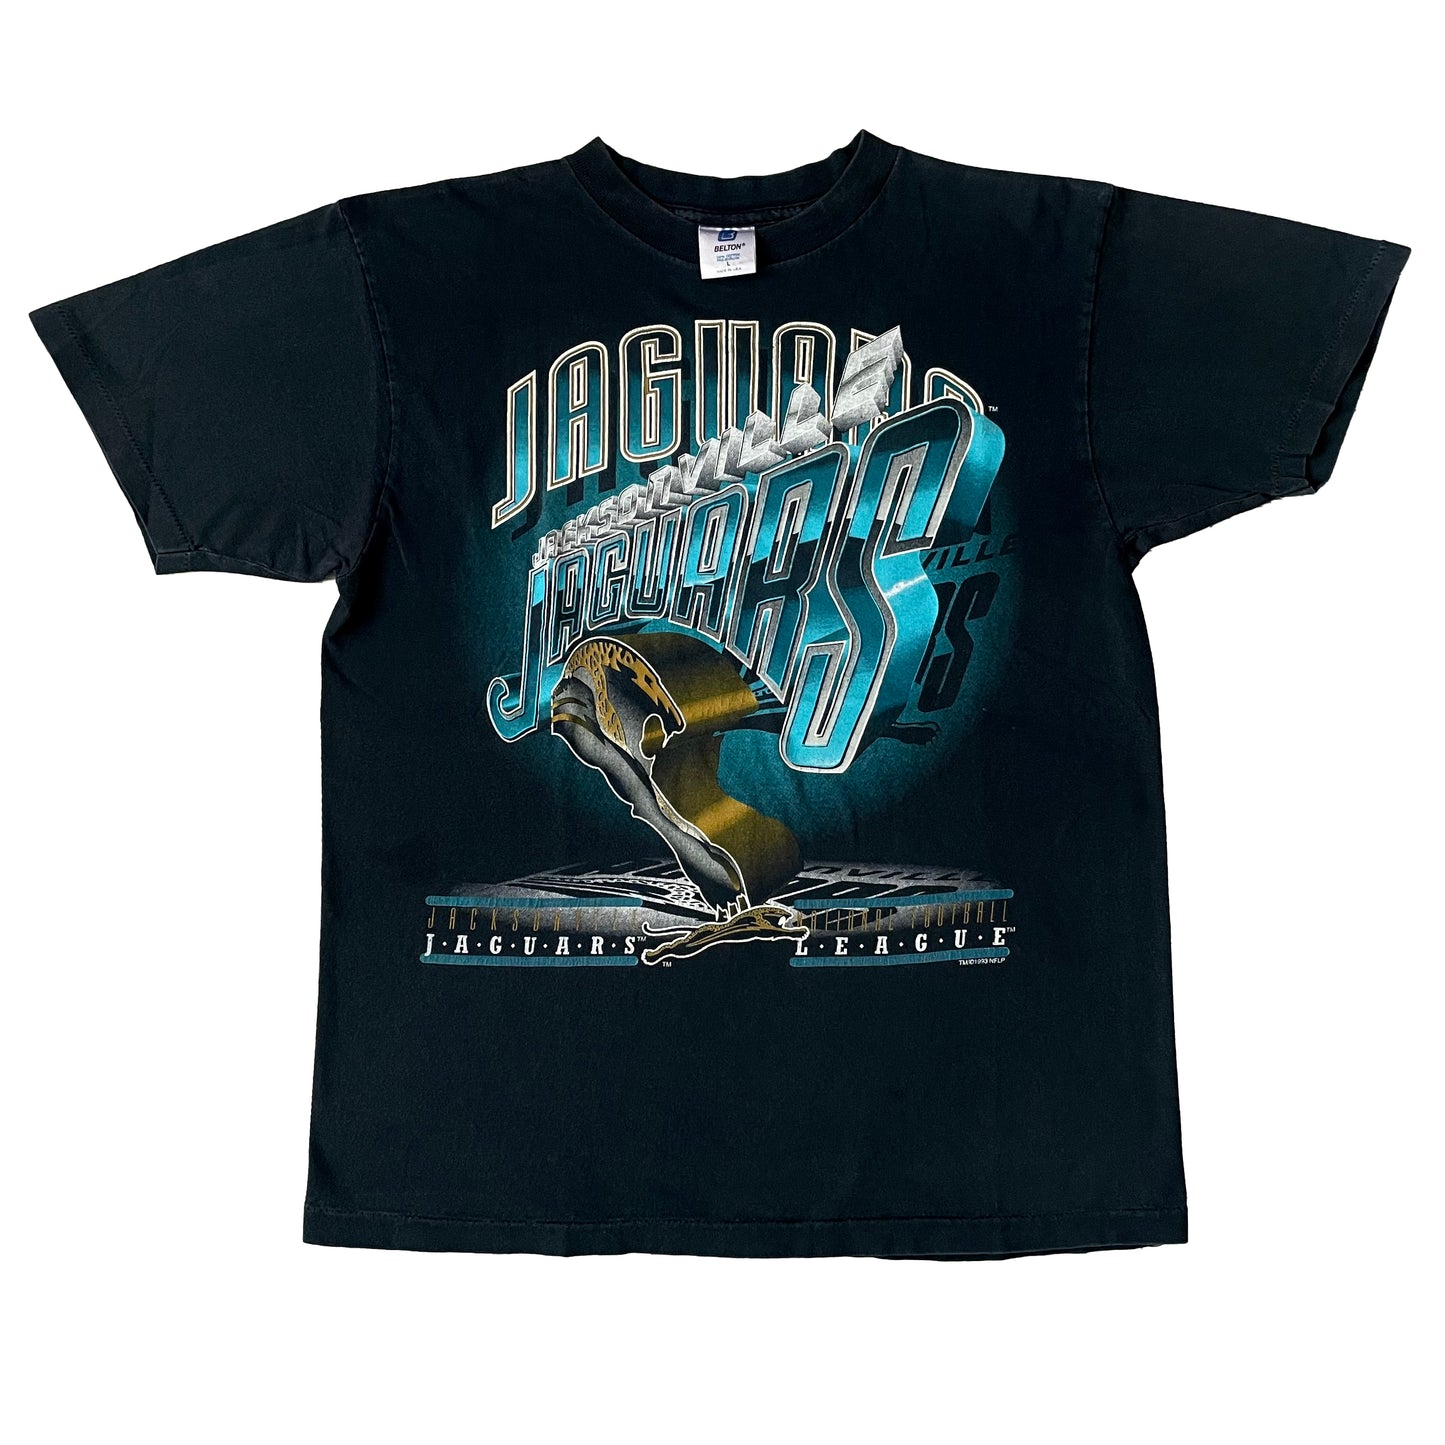 Jacksonville Jaguars 1993 chrome banned logo shirt MEDIUM